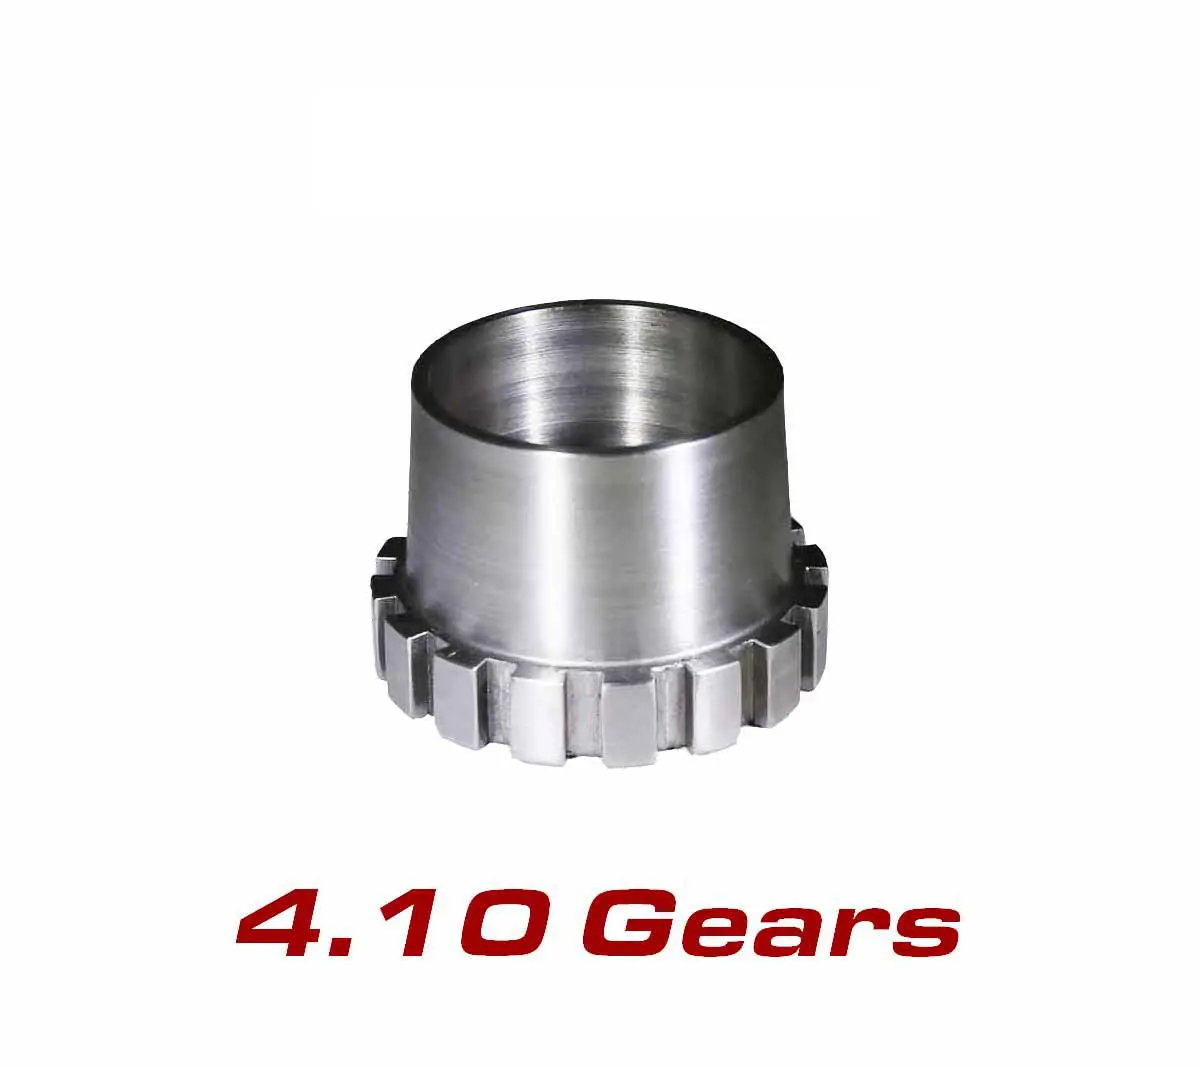 Generation 1 Wheel Bearings: Integrated ABS Tone Ring